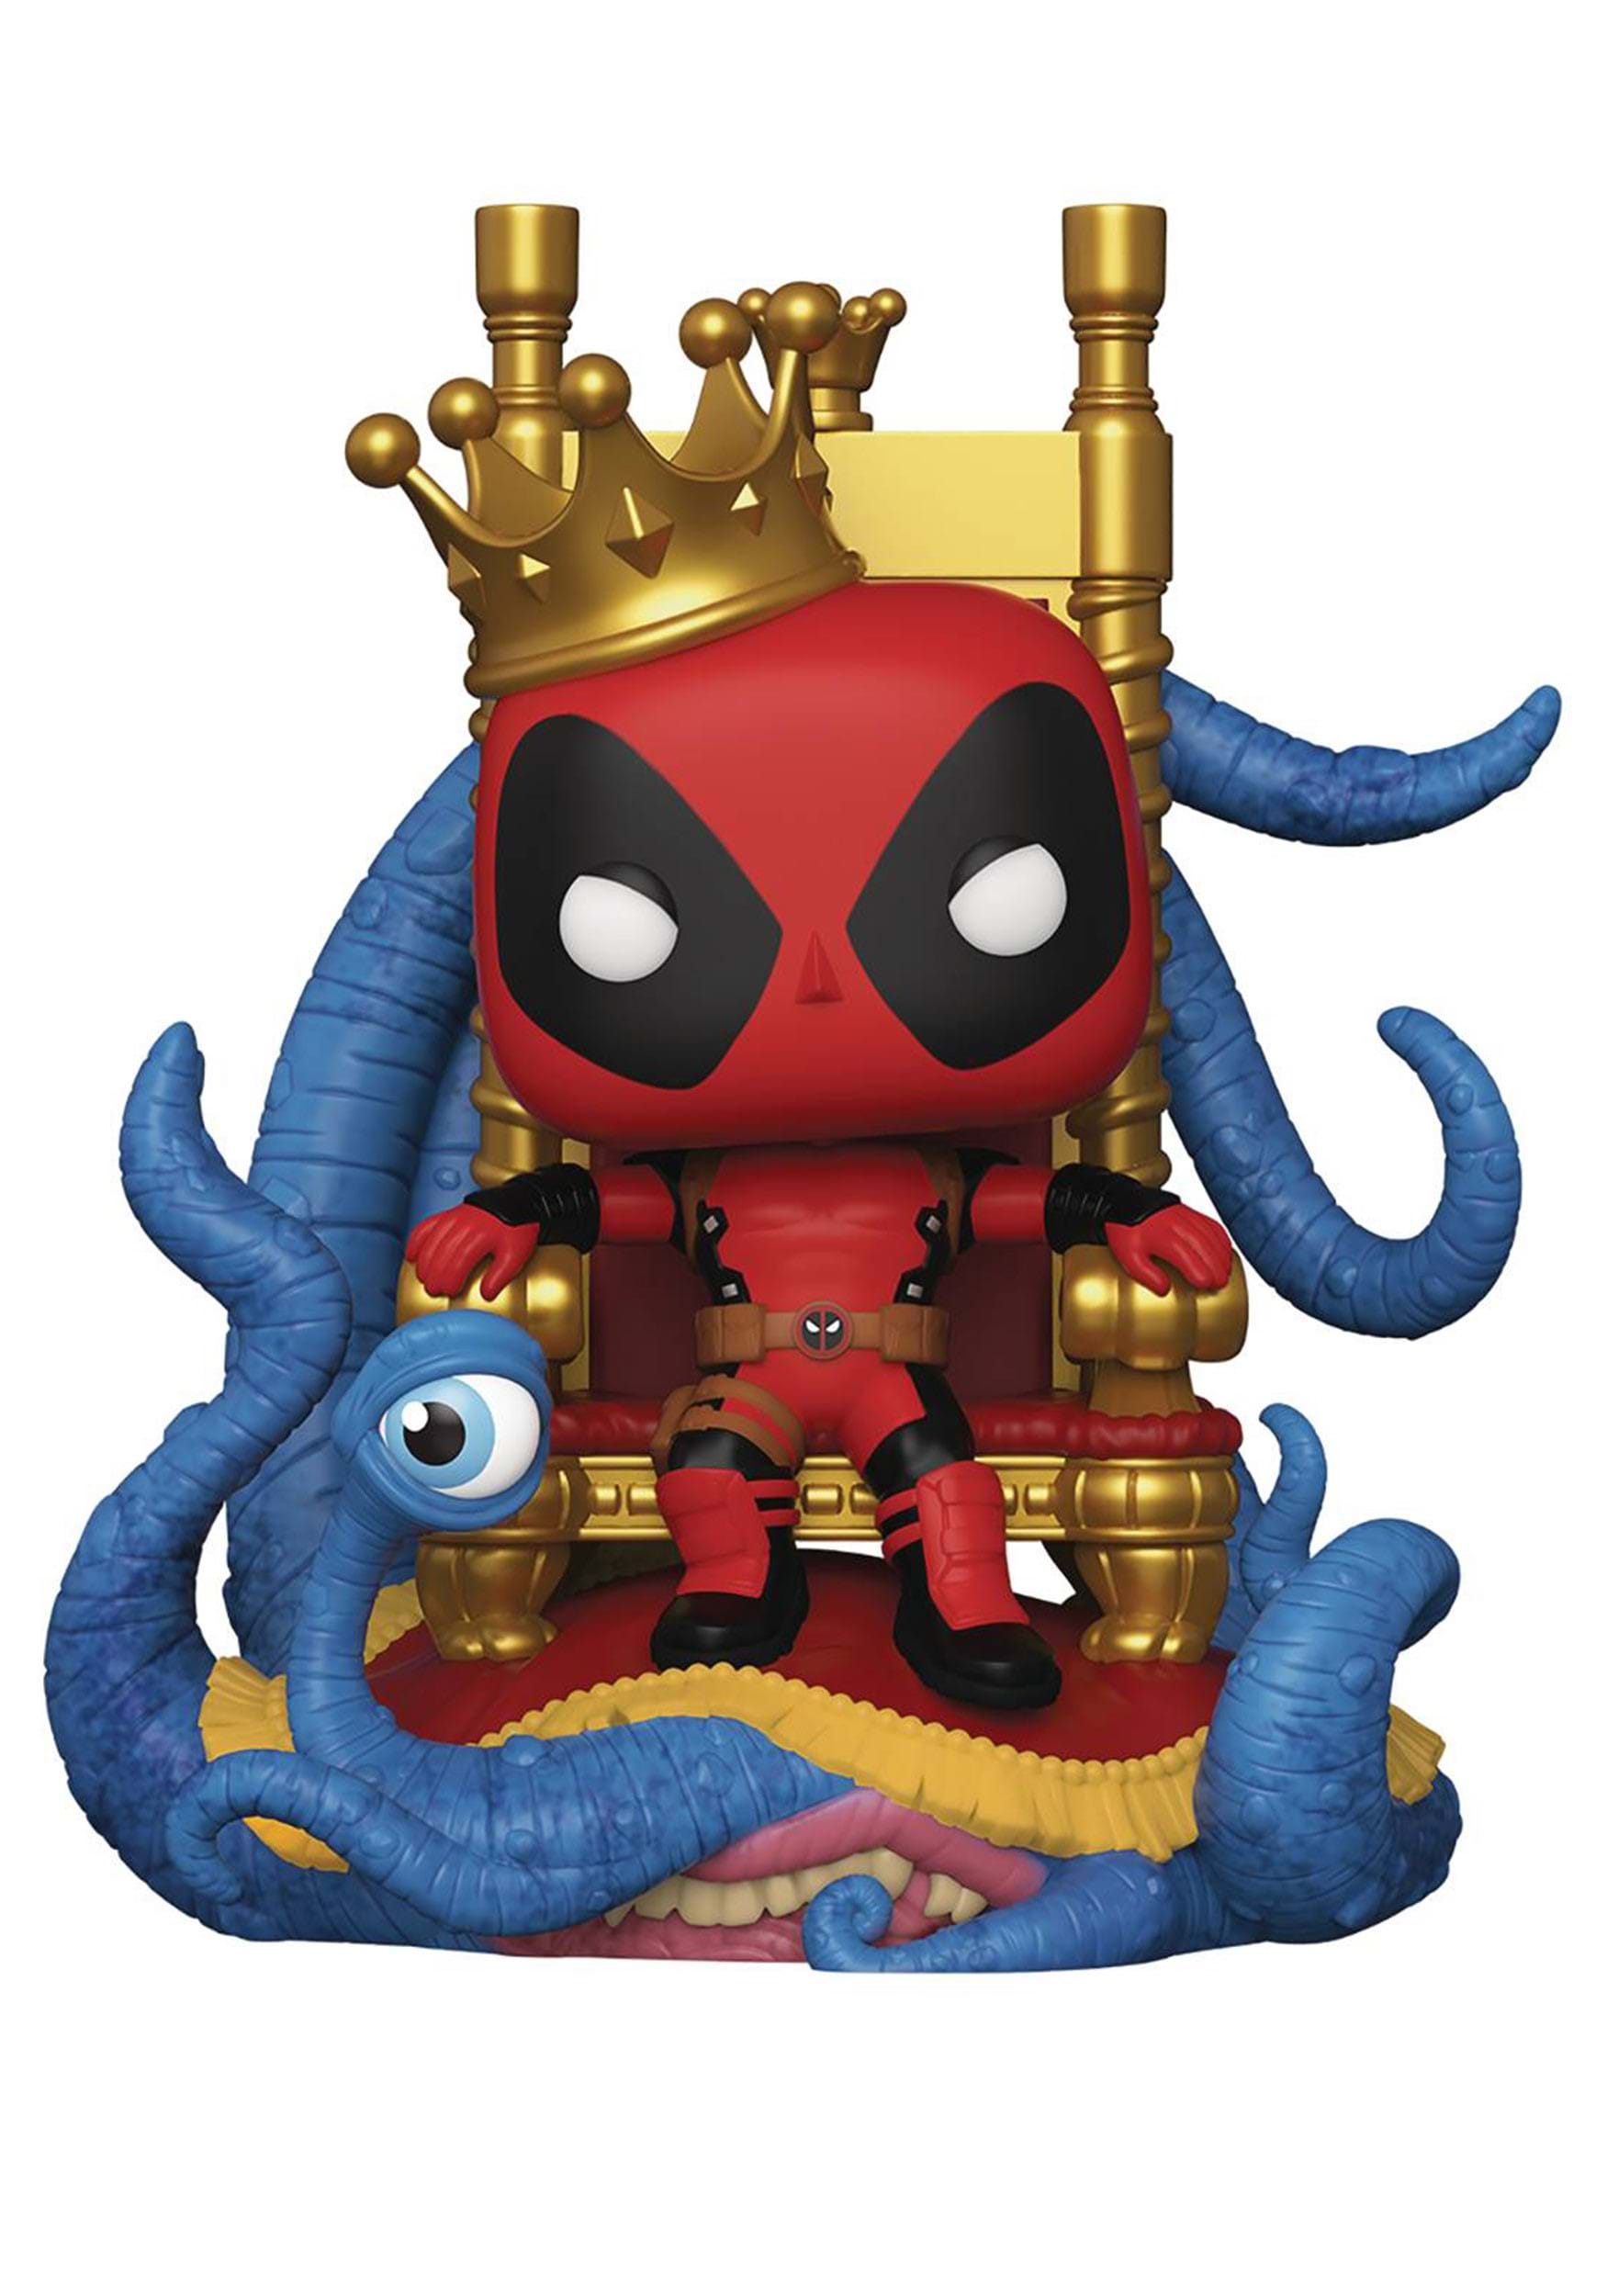 Funko Pop! Deluxe Marvel Heroes King Deadpool Bobblehead